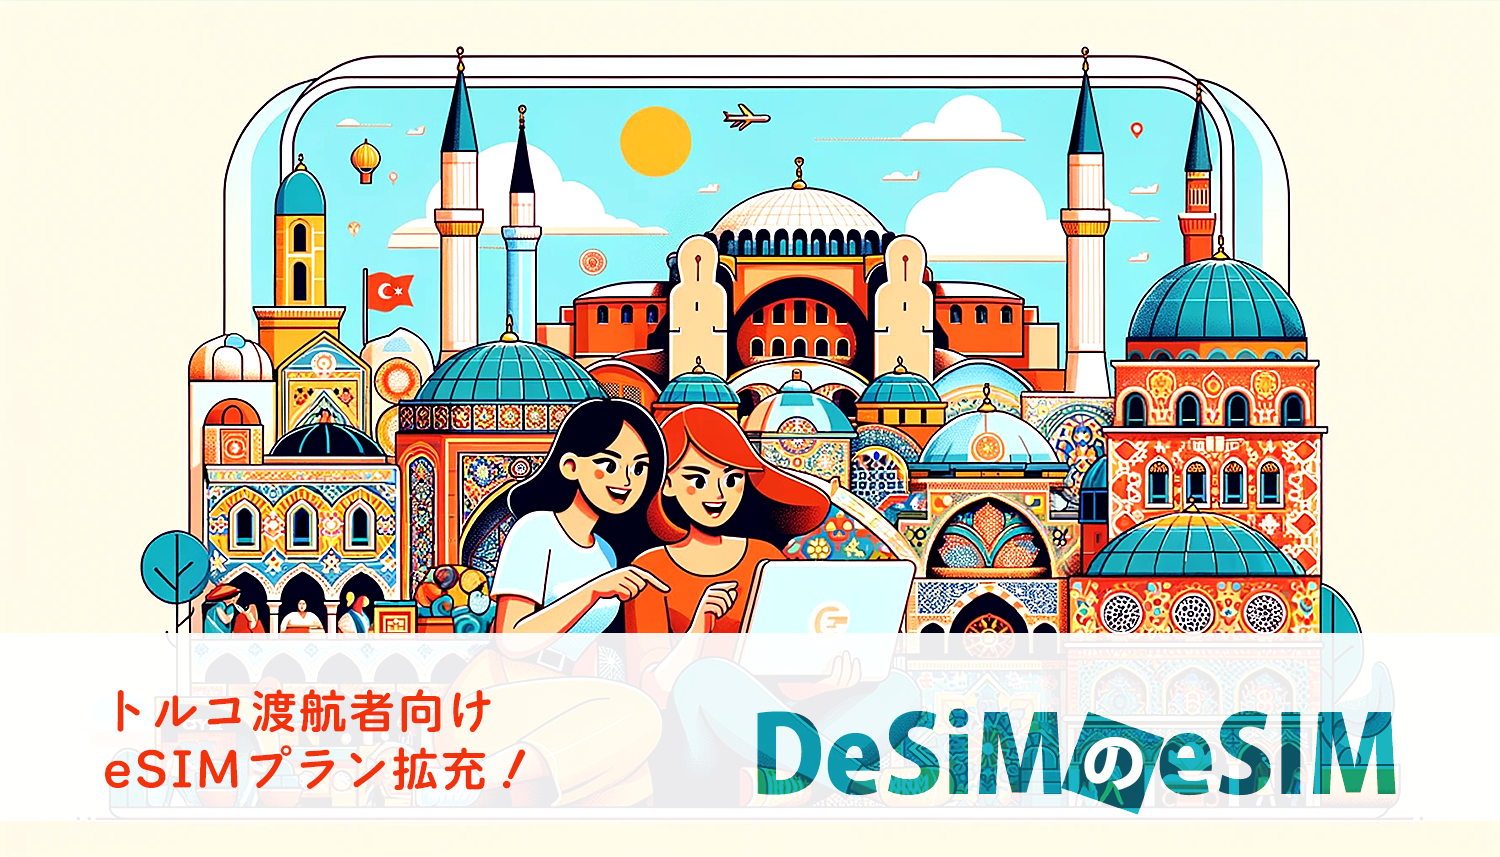 DeSiM の eSIM トルコ渡航者向け